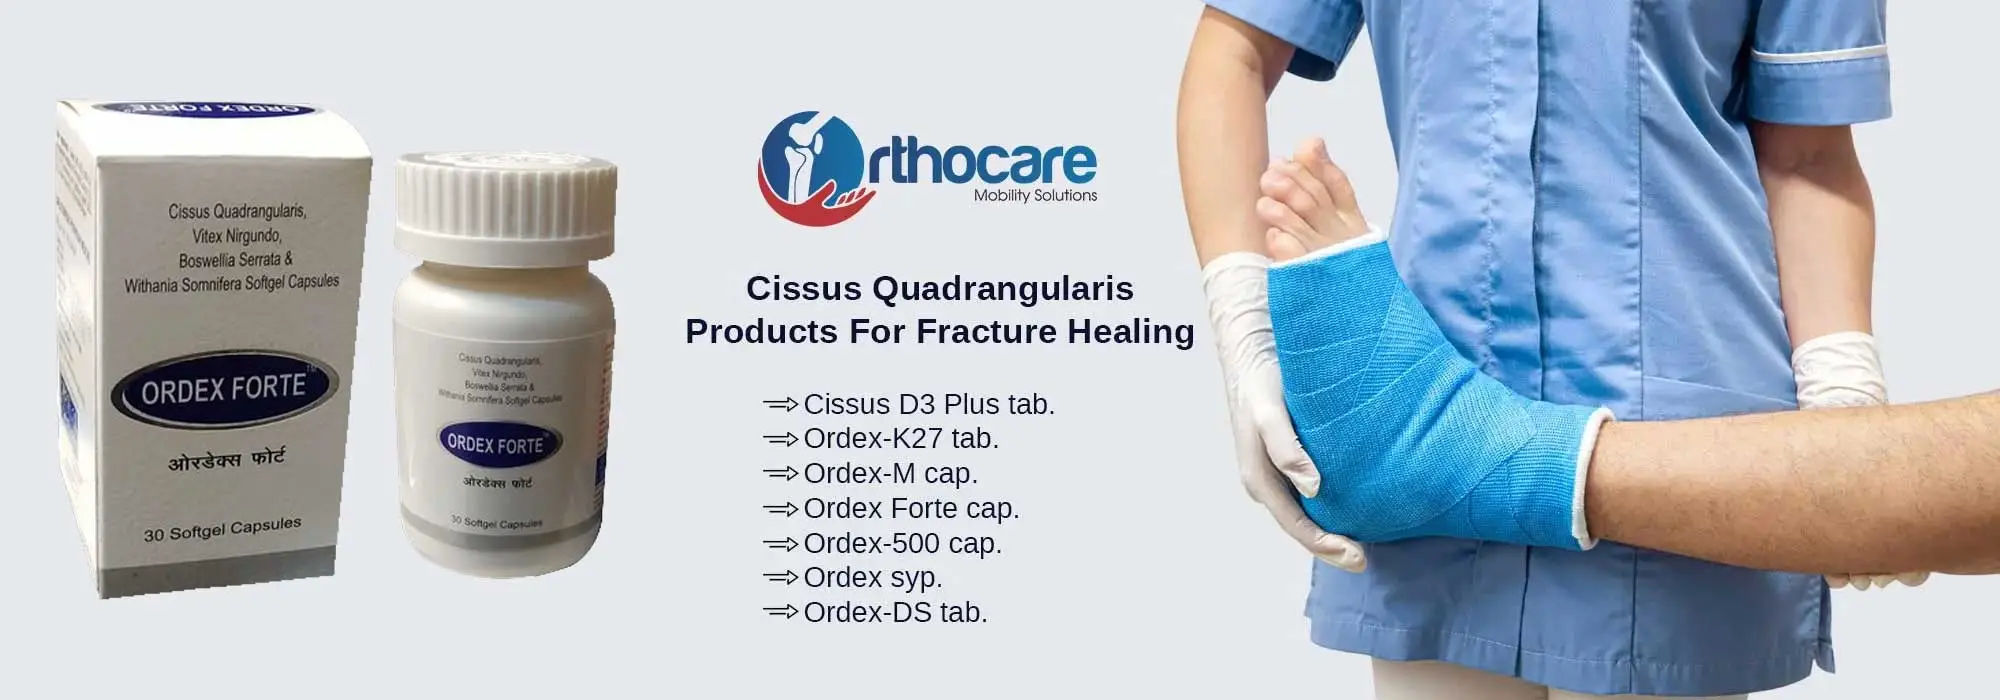 Cissus Quadrangularis Products For Fracture Healing Suppliers in Warangal Rural